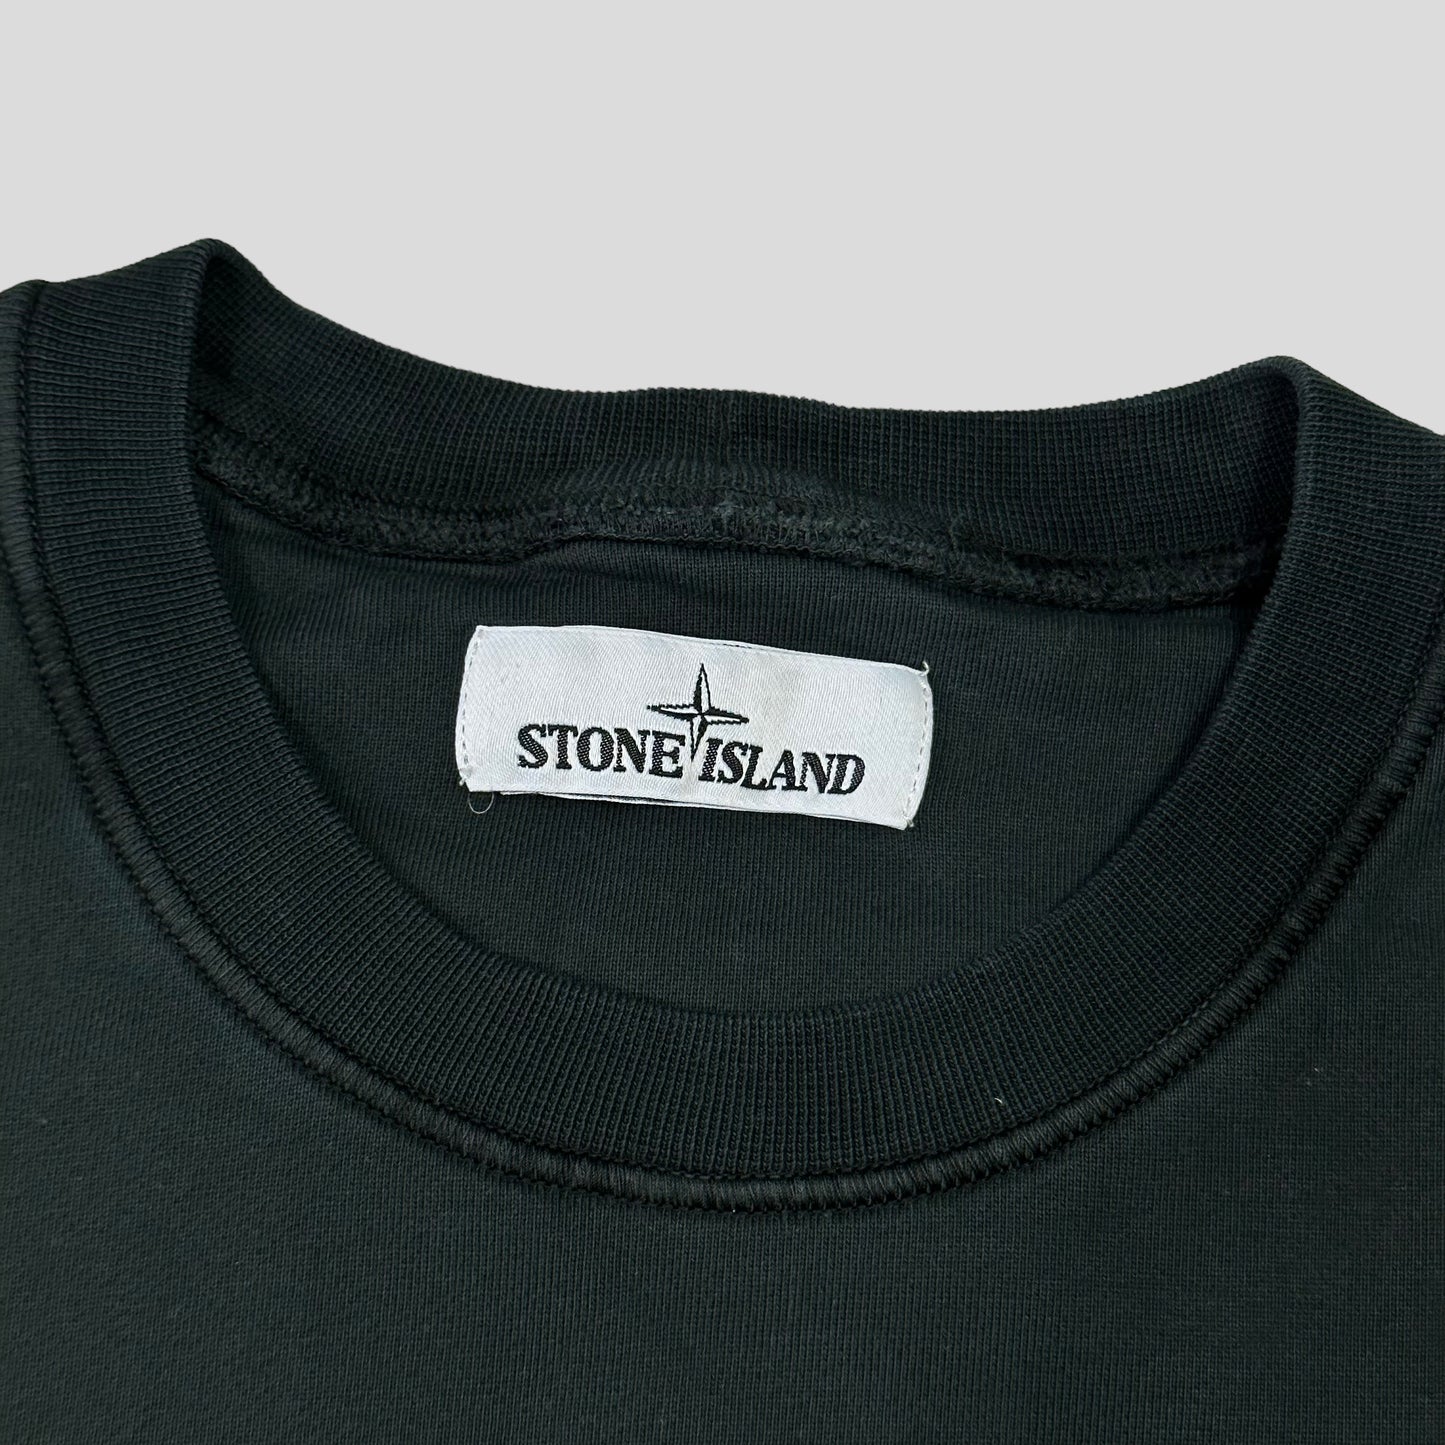 Stone Island 2020 Cotton Crewneck - L